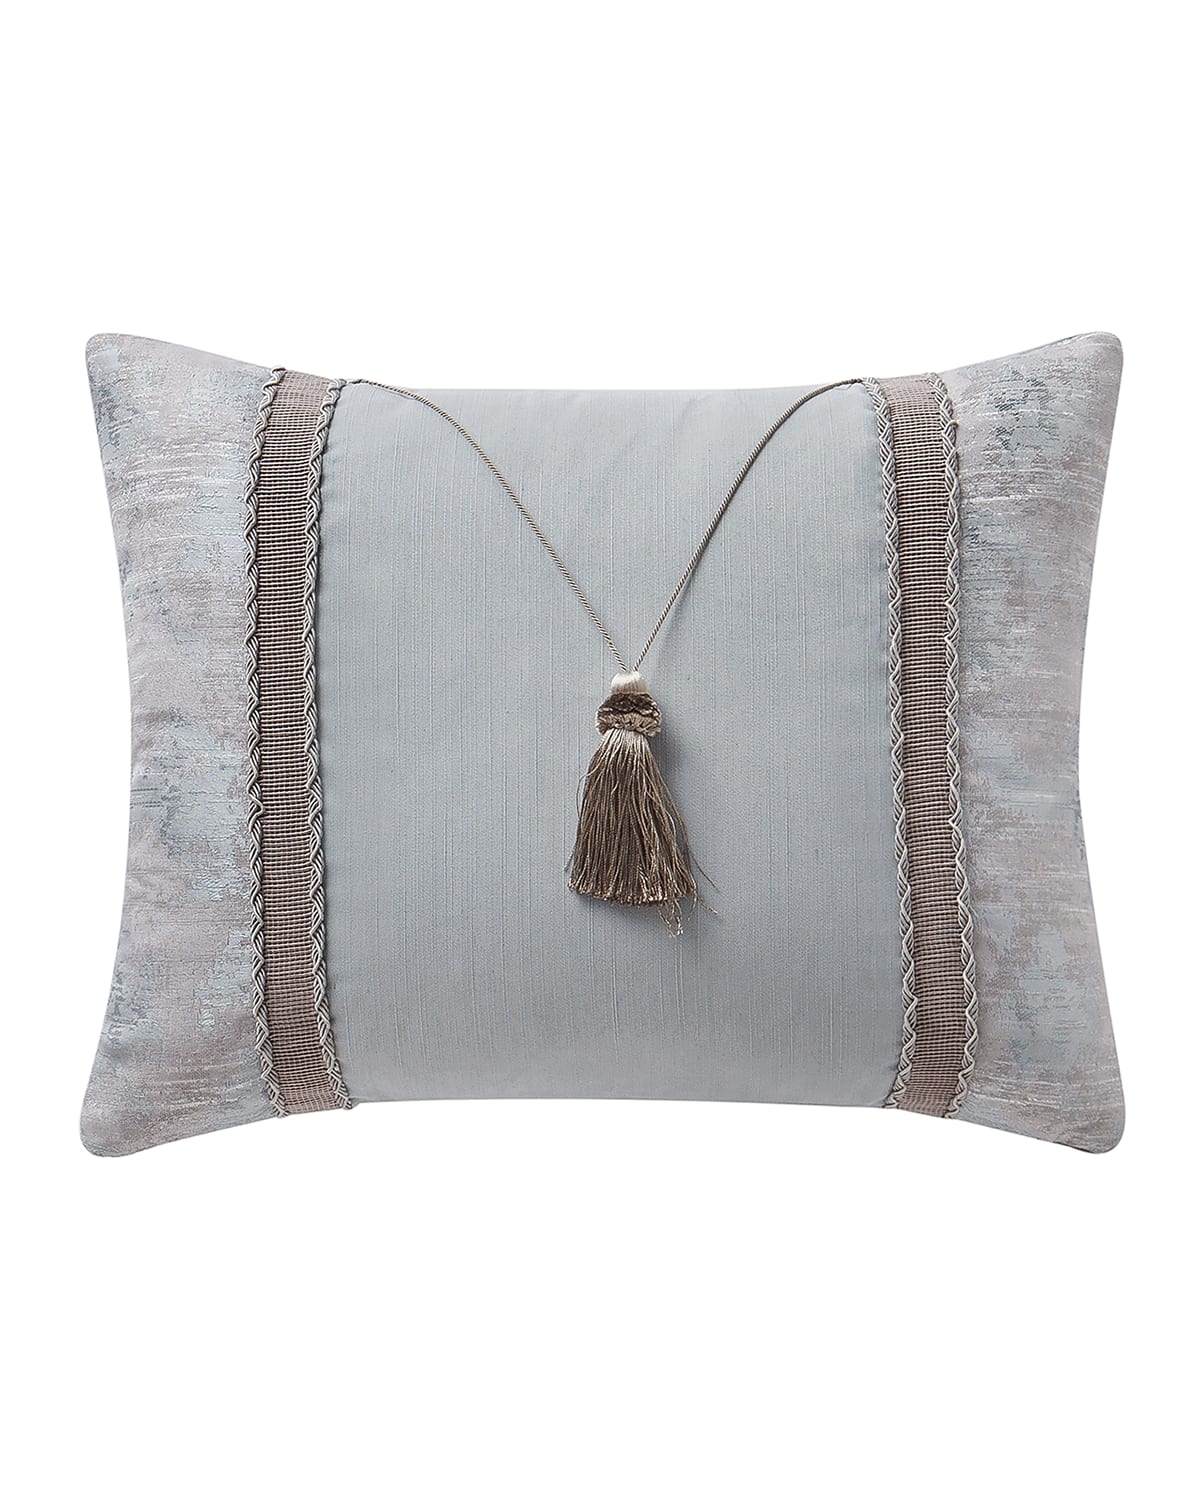 Image Waterford Farrah Decorative Pillow, 16" x 20"